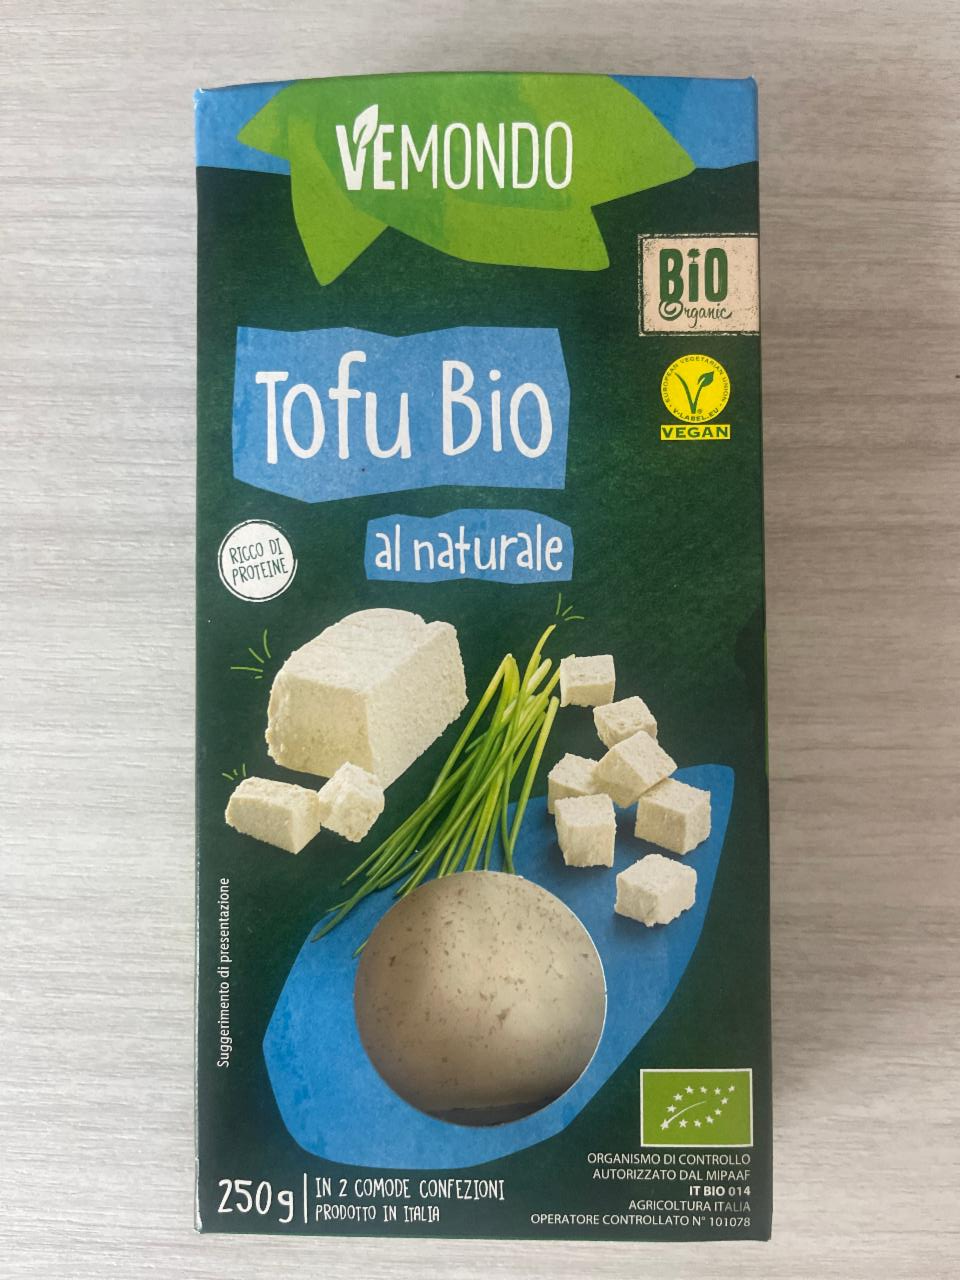 Fotografie - Tofu Bio al naturale Vemondo